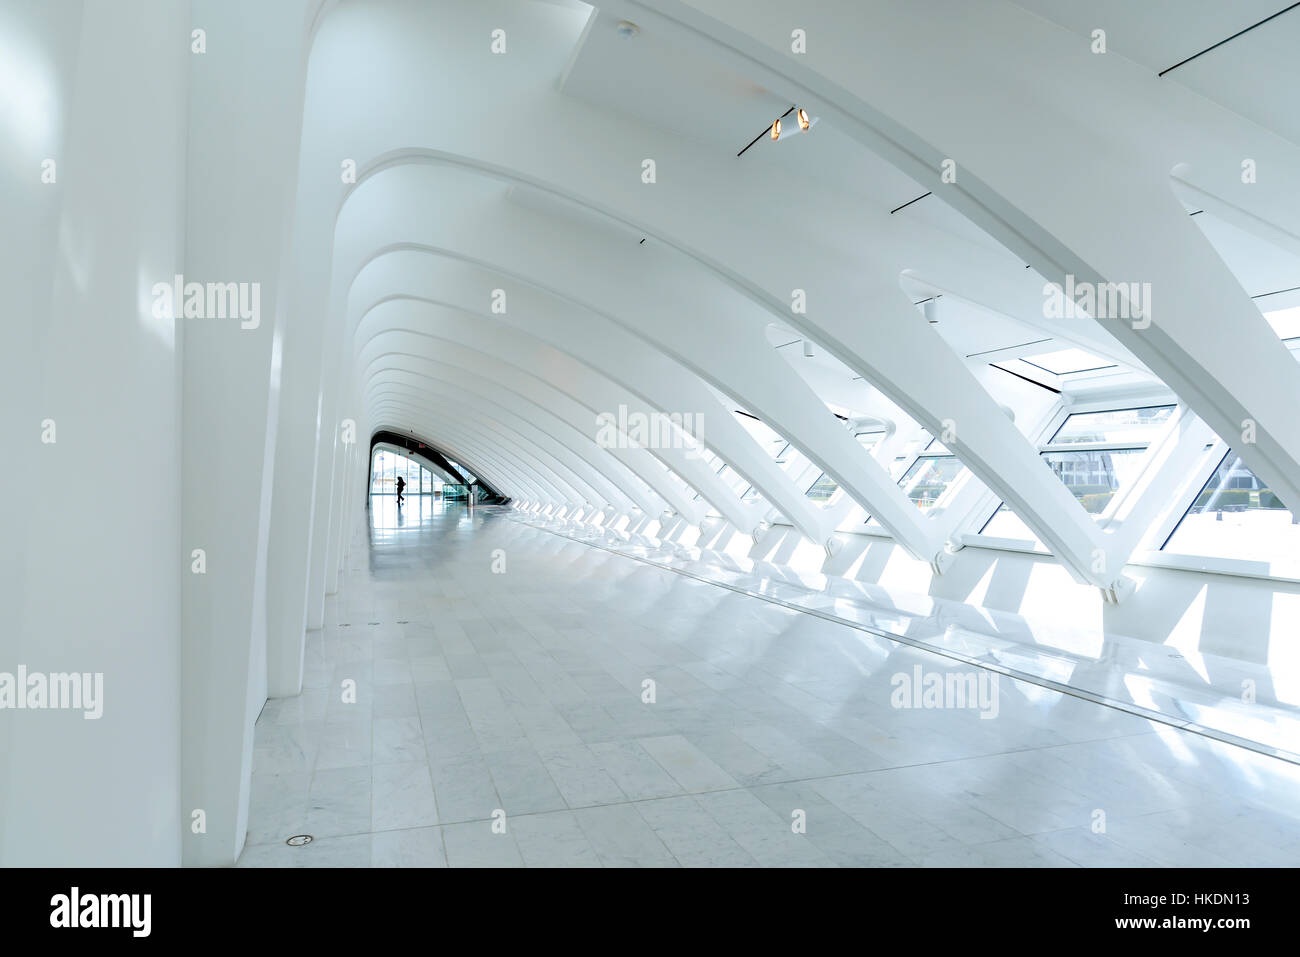 Milwaukee Art Museum von Santiago Calatrava entworfen. Stockfoto